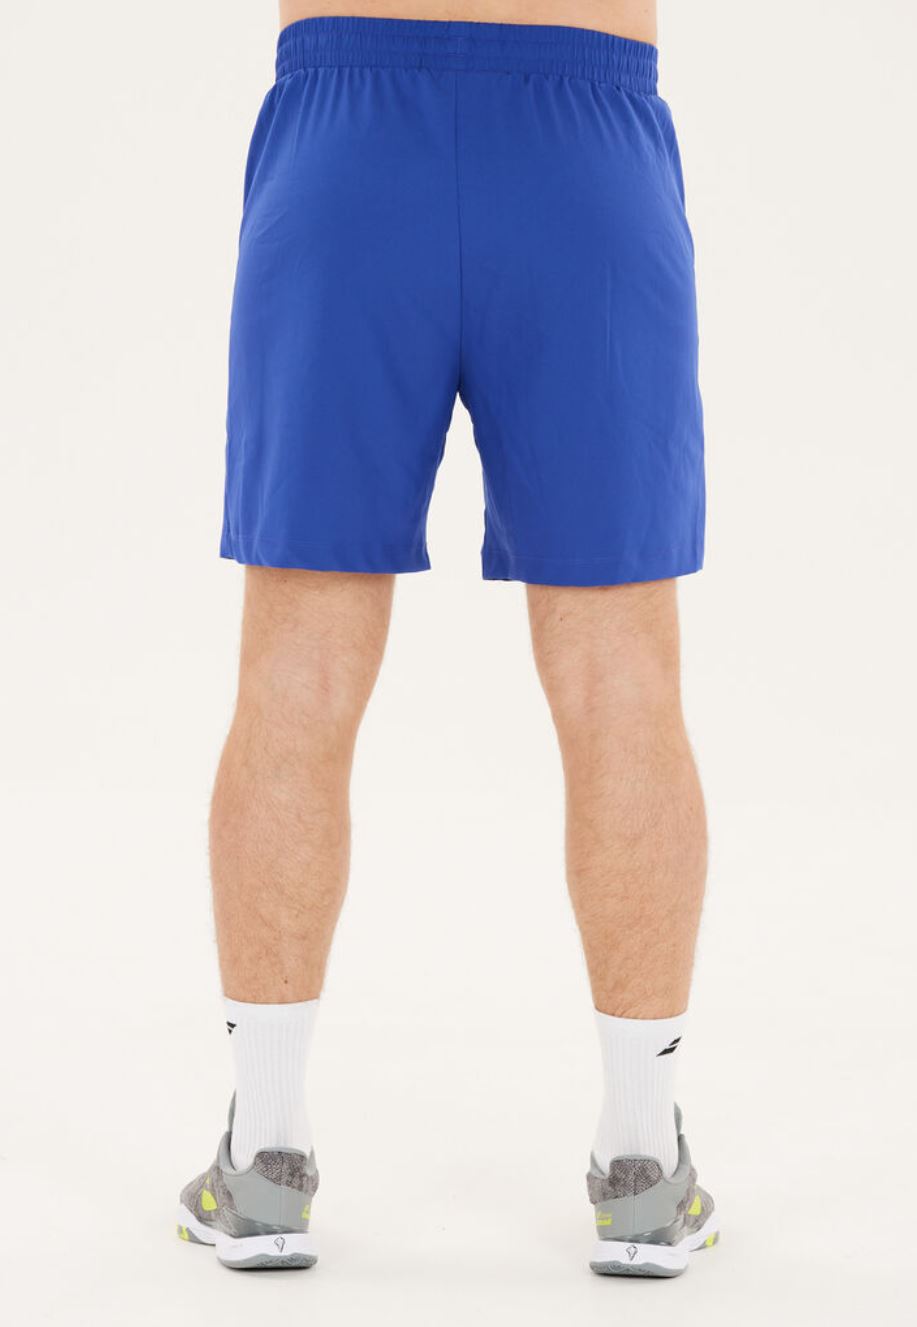 Babolat Play Shorts (Men, Blue)